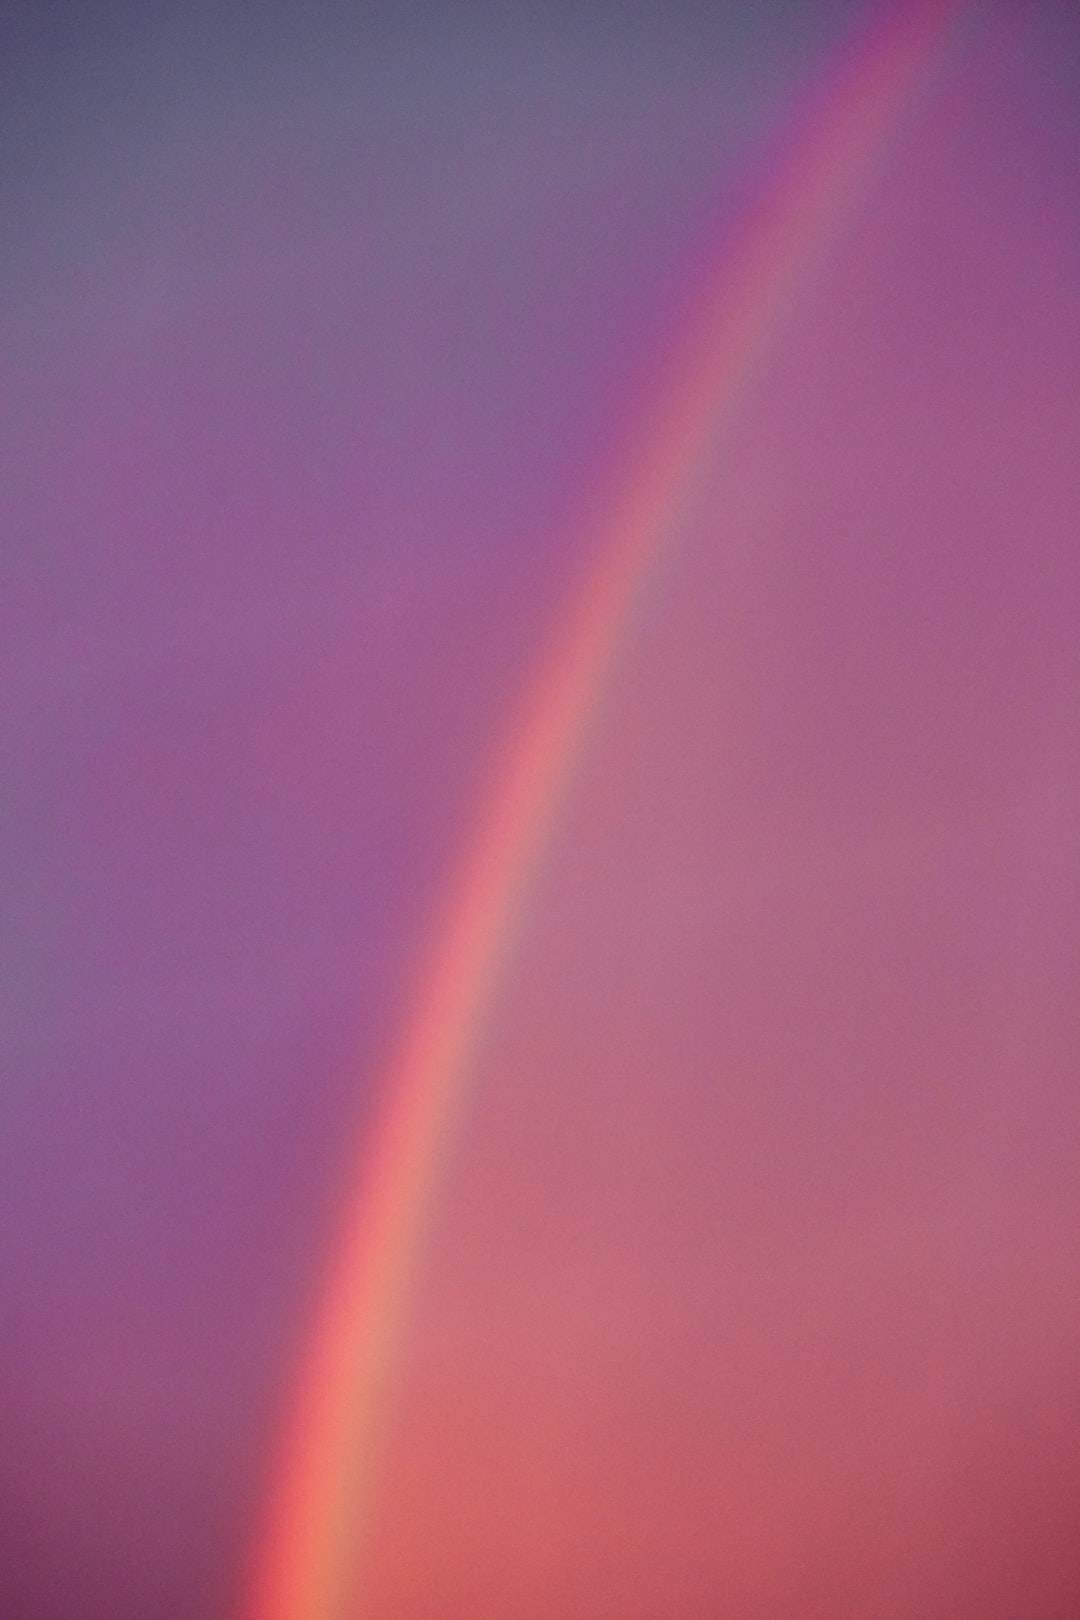 Rainbow over Warsaw, Poland.